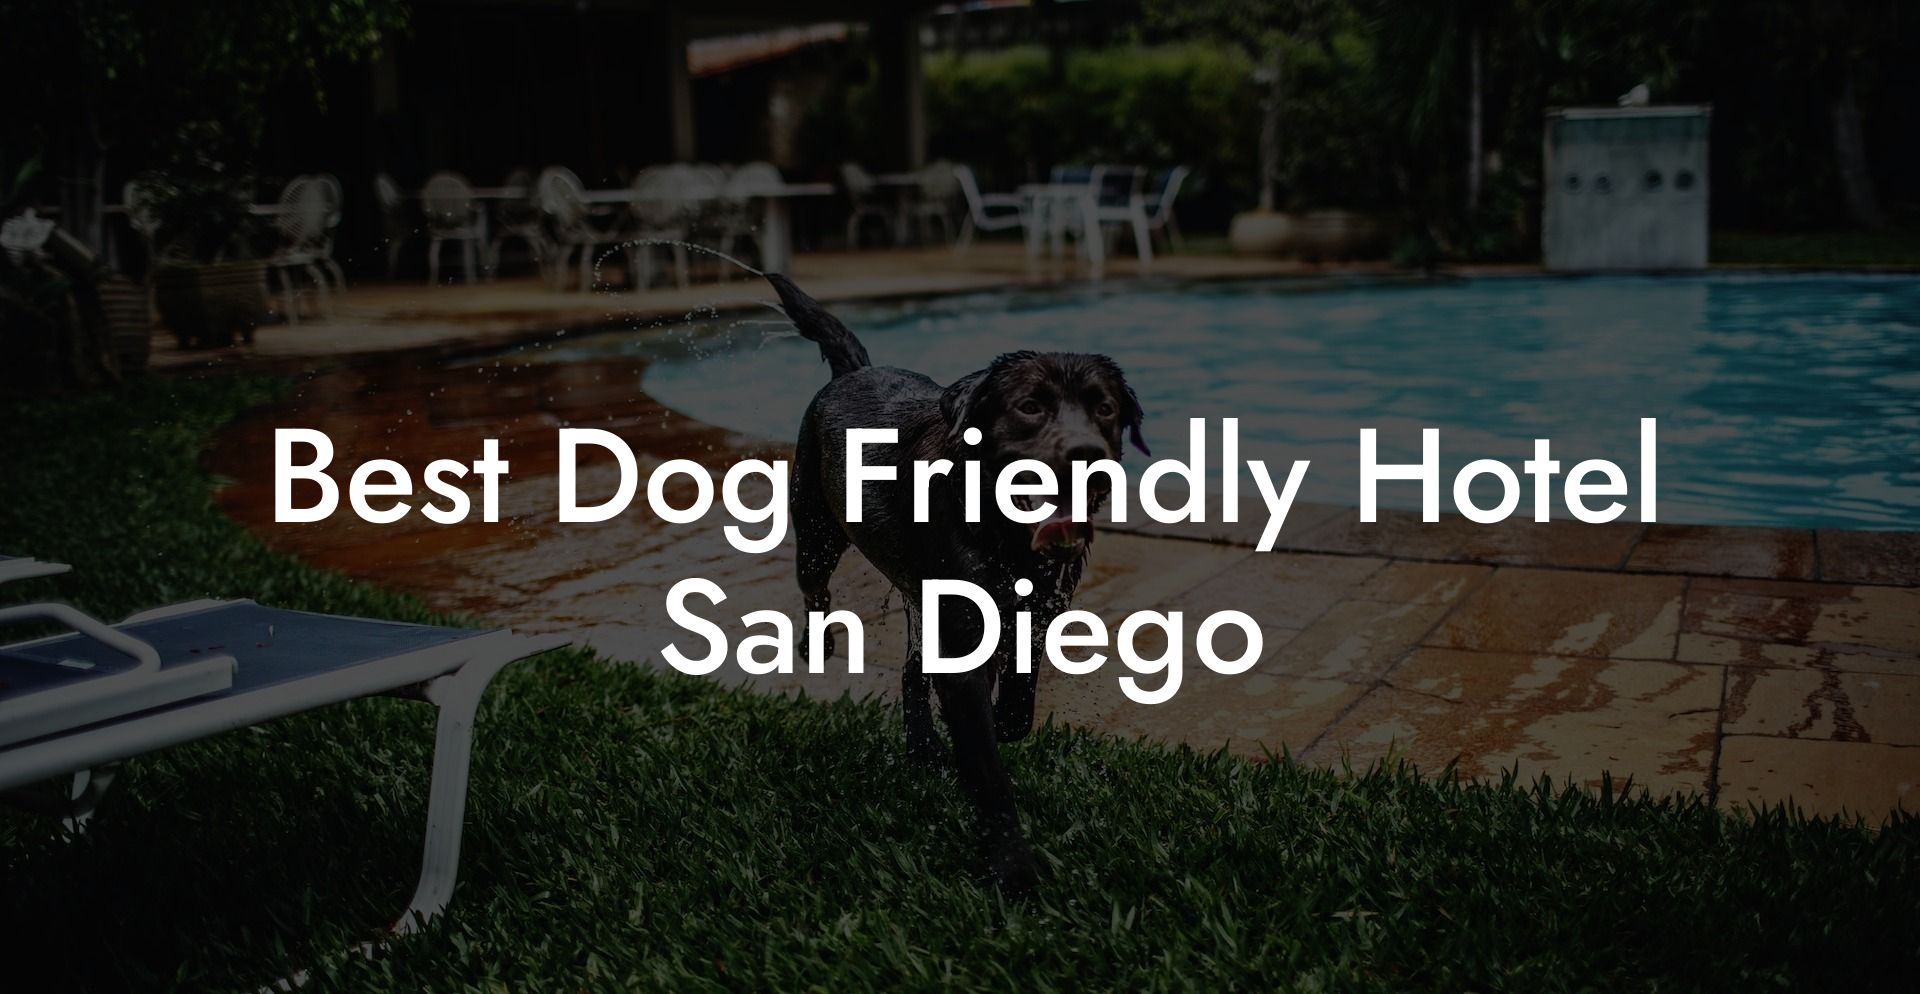 Best Dog Friendly Hotel San Diego